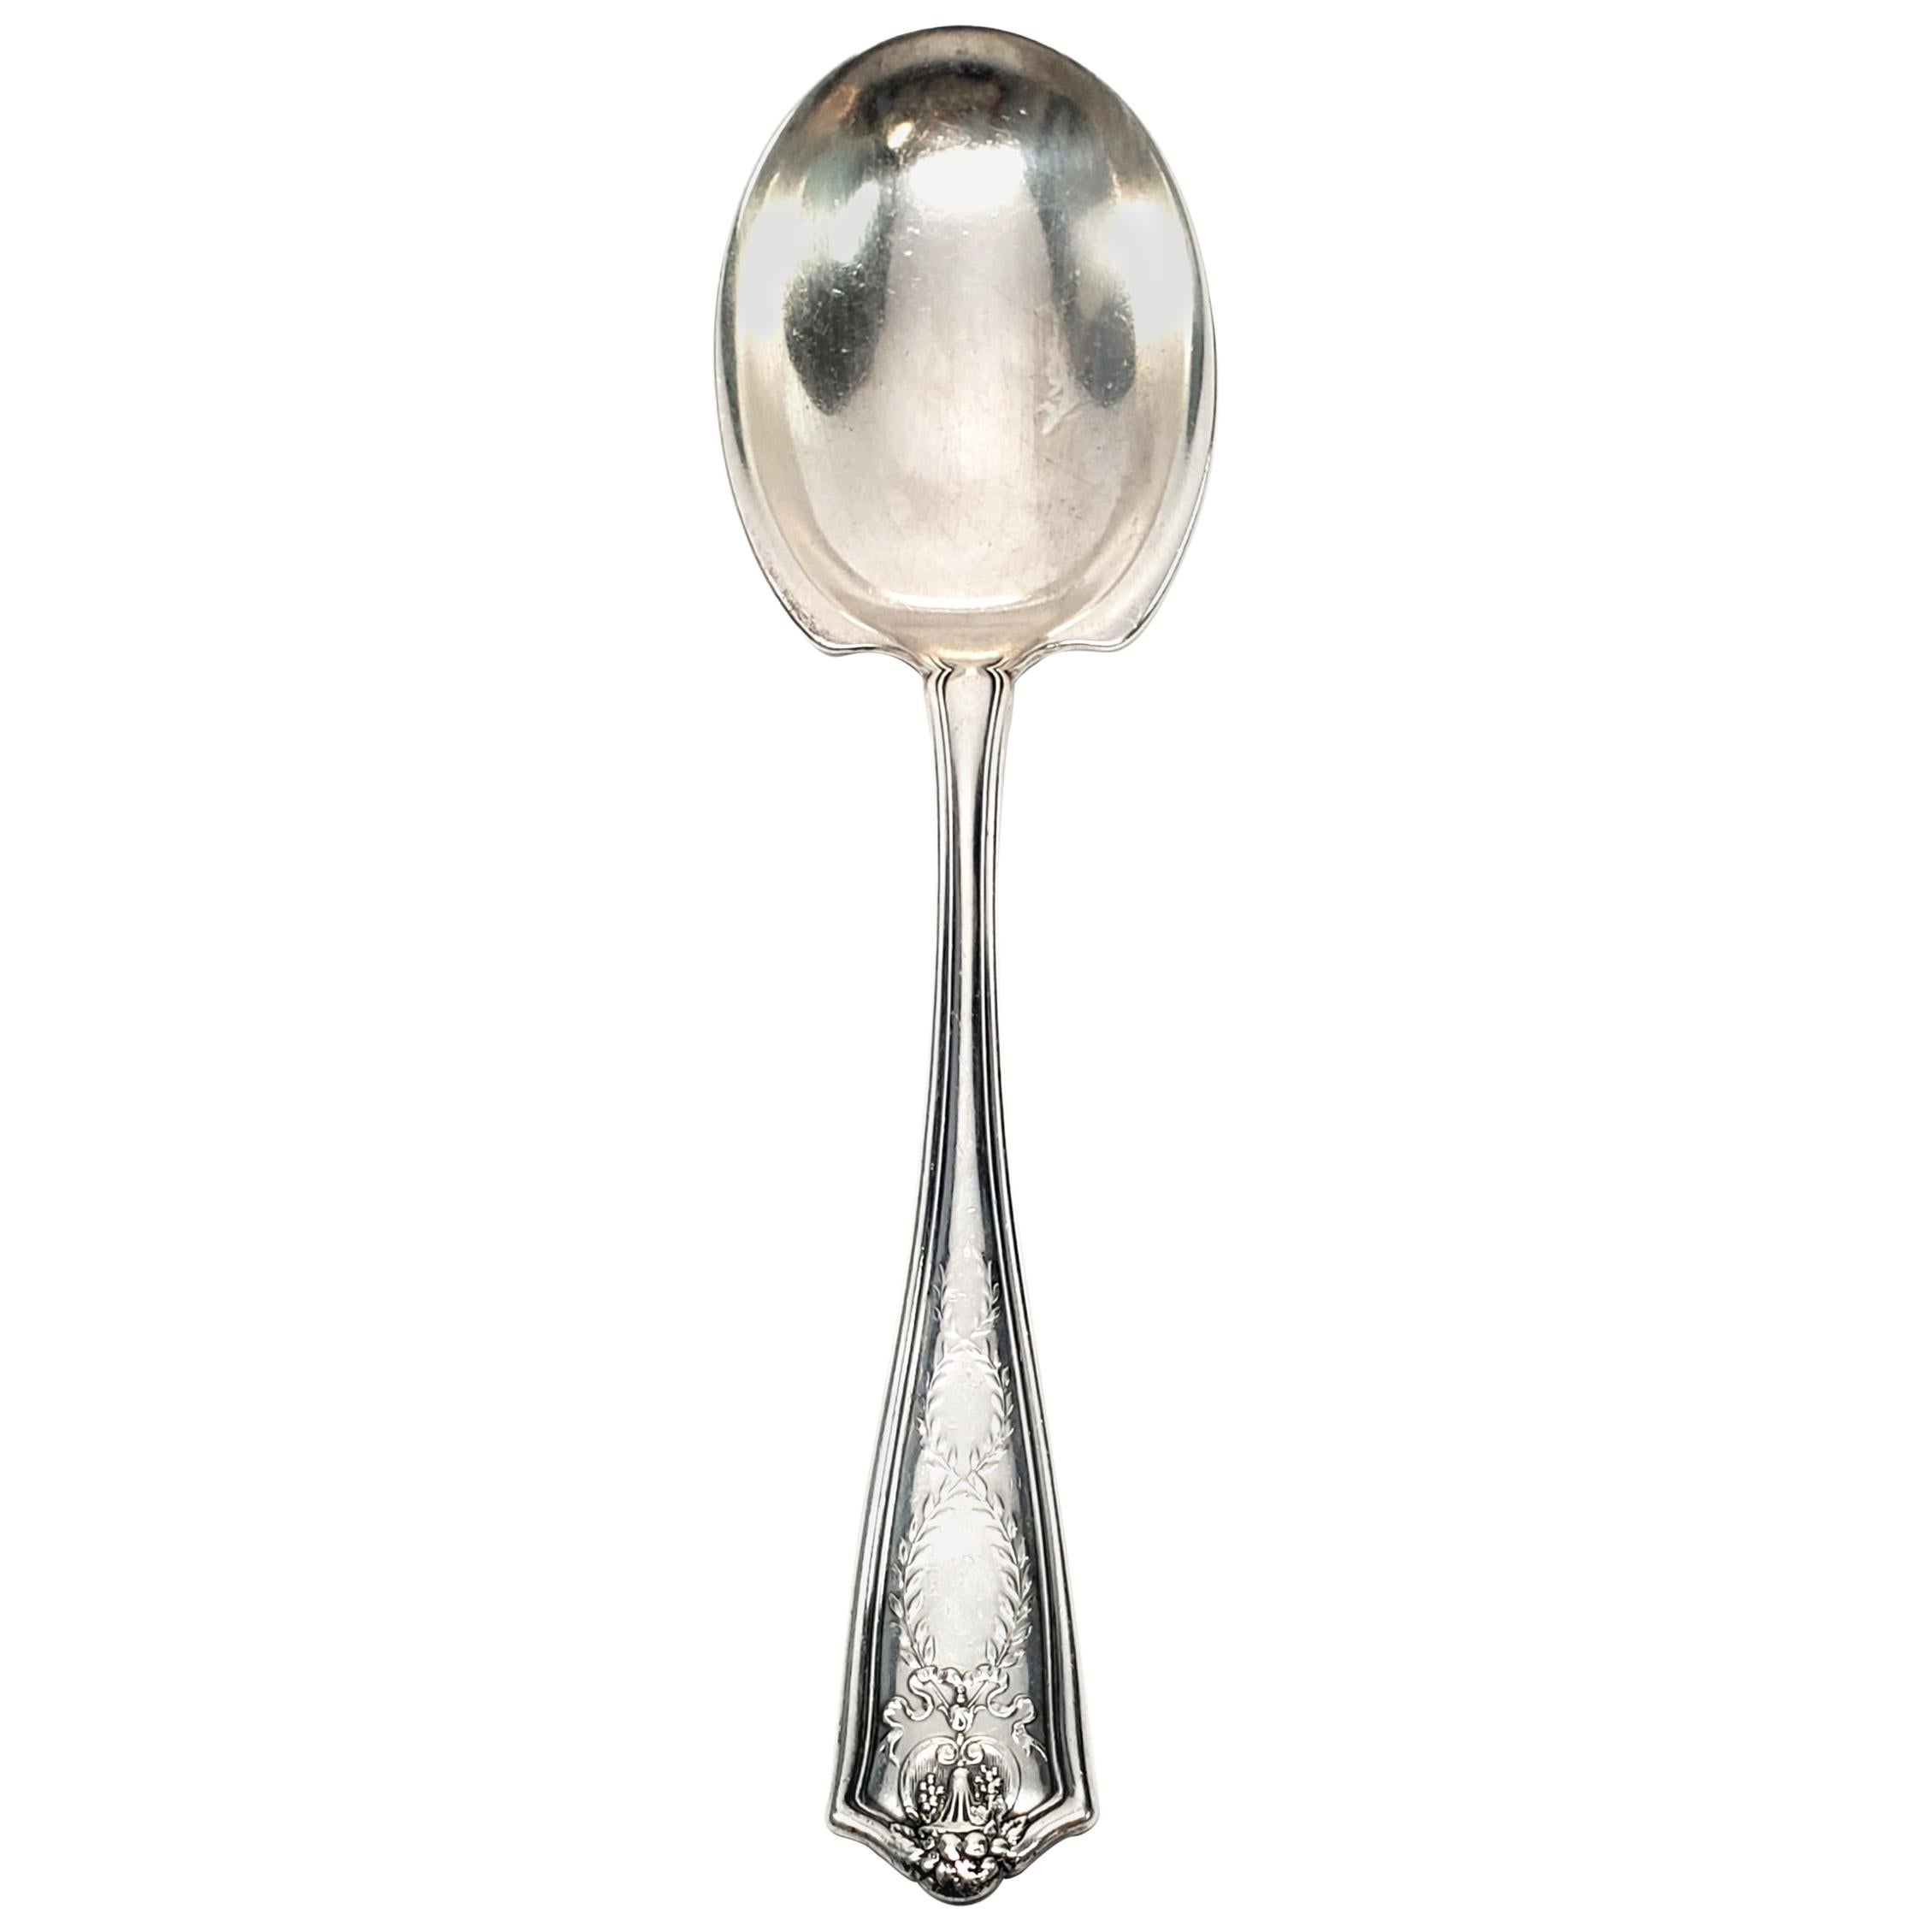 Tiffany & Co. Sterling Silver Winthrop Solid Berry/Casserole Spoon